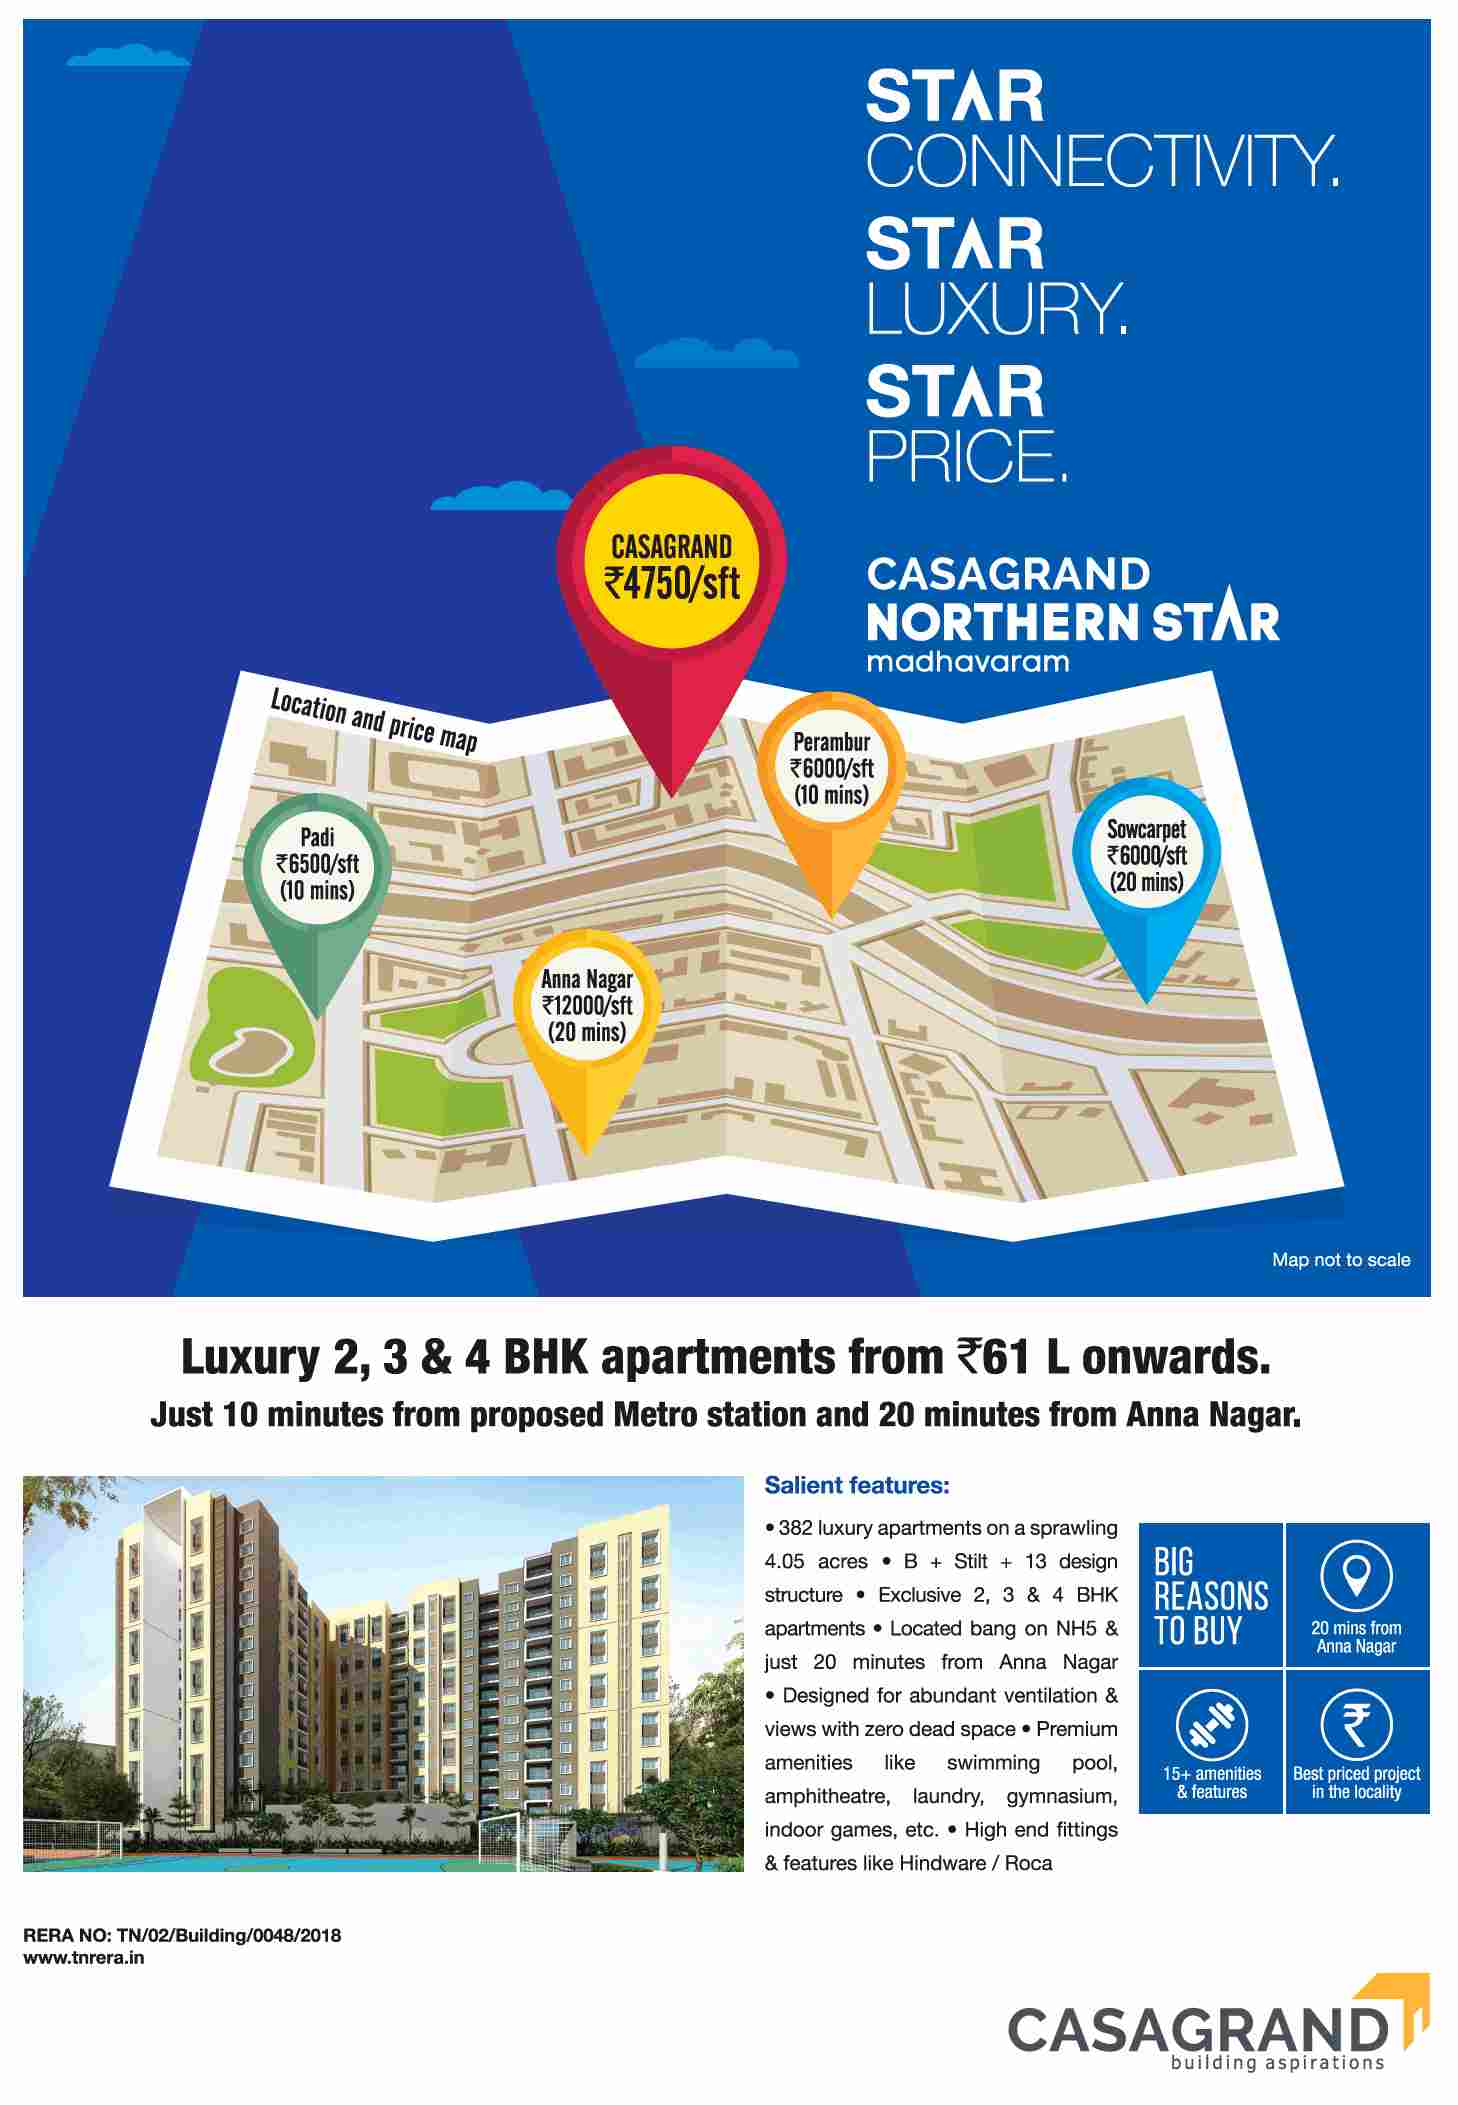 Book luxurious homes @ Rs 4750 per sqft at Casagrand Northern Star in Madhavaram, Chennai